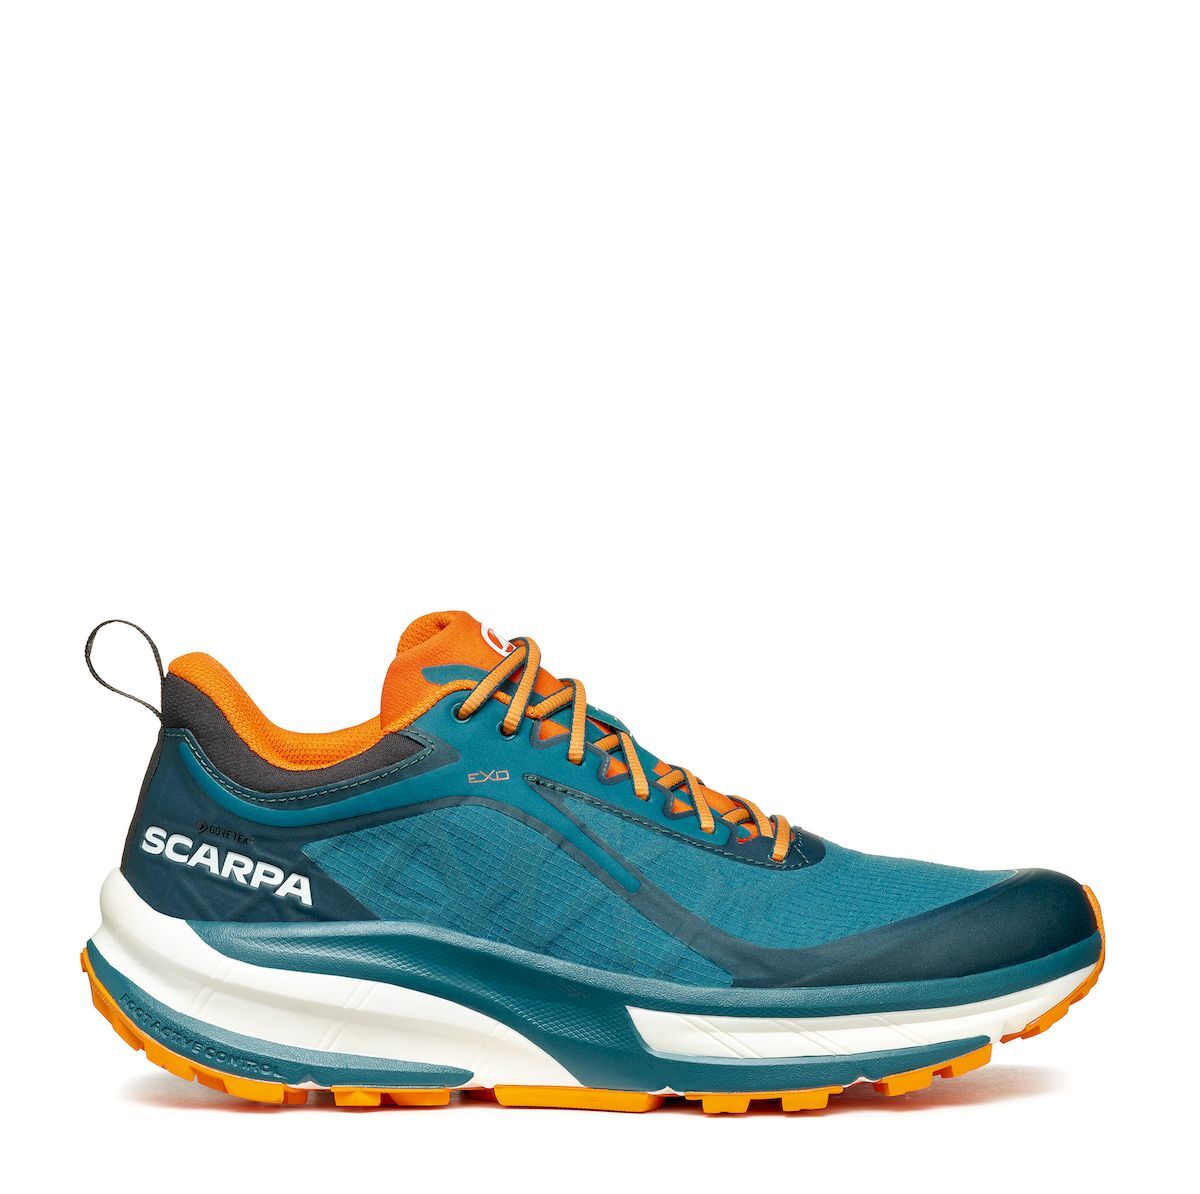 Scarpa Golden Gate ATR GTX - Trail running shoes - Men's